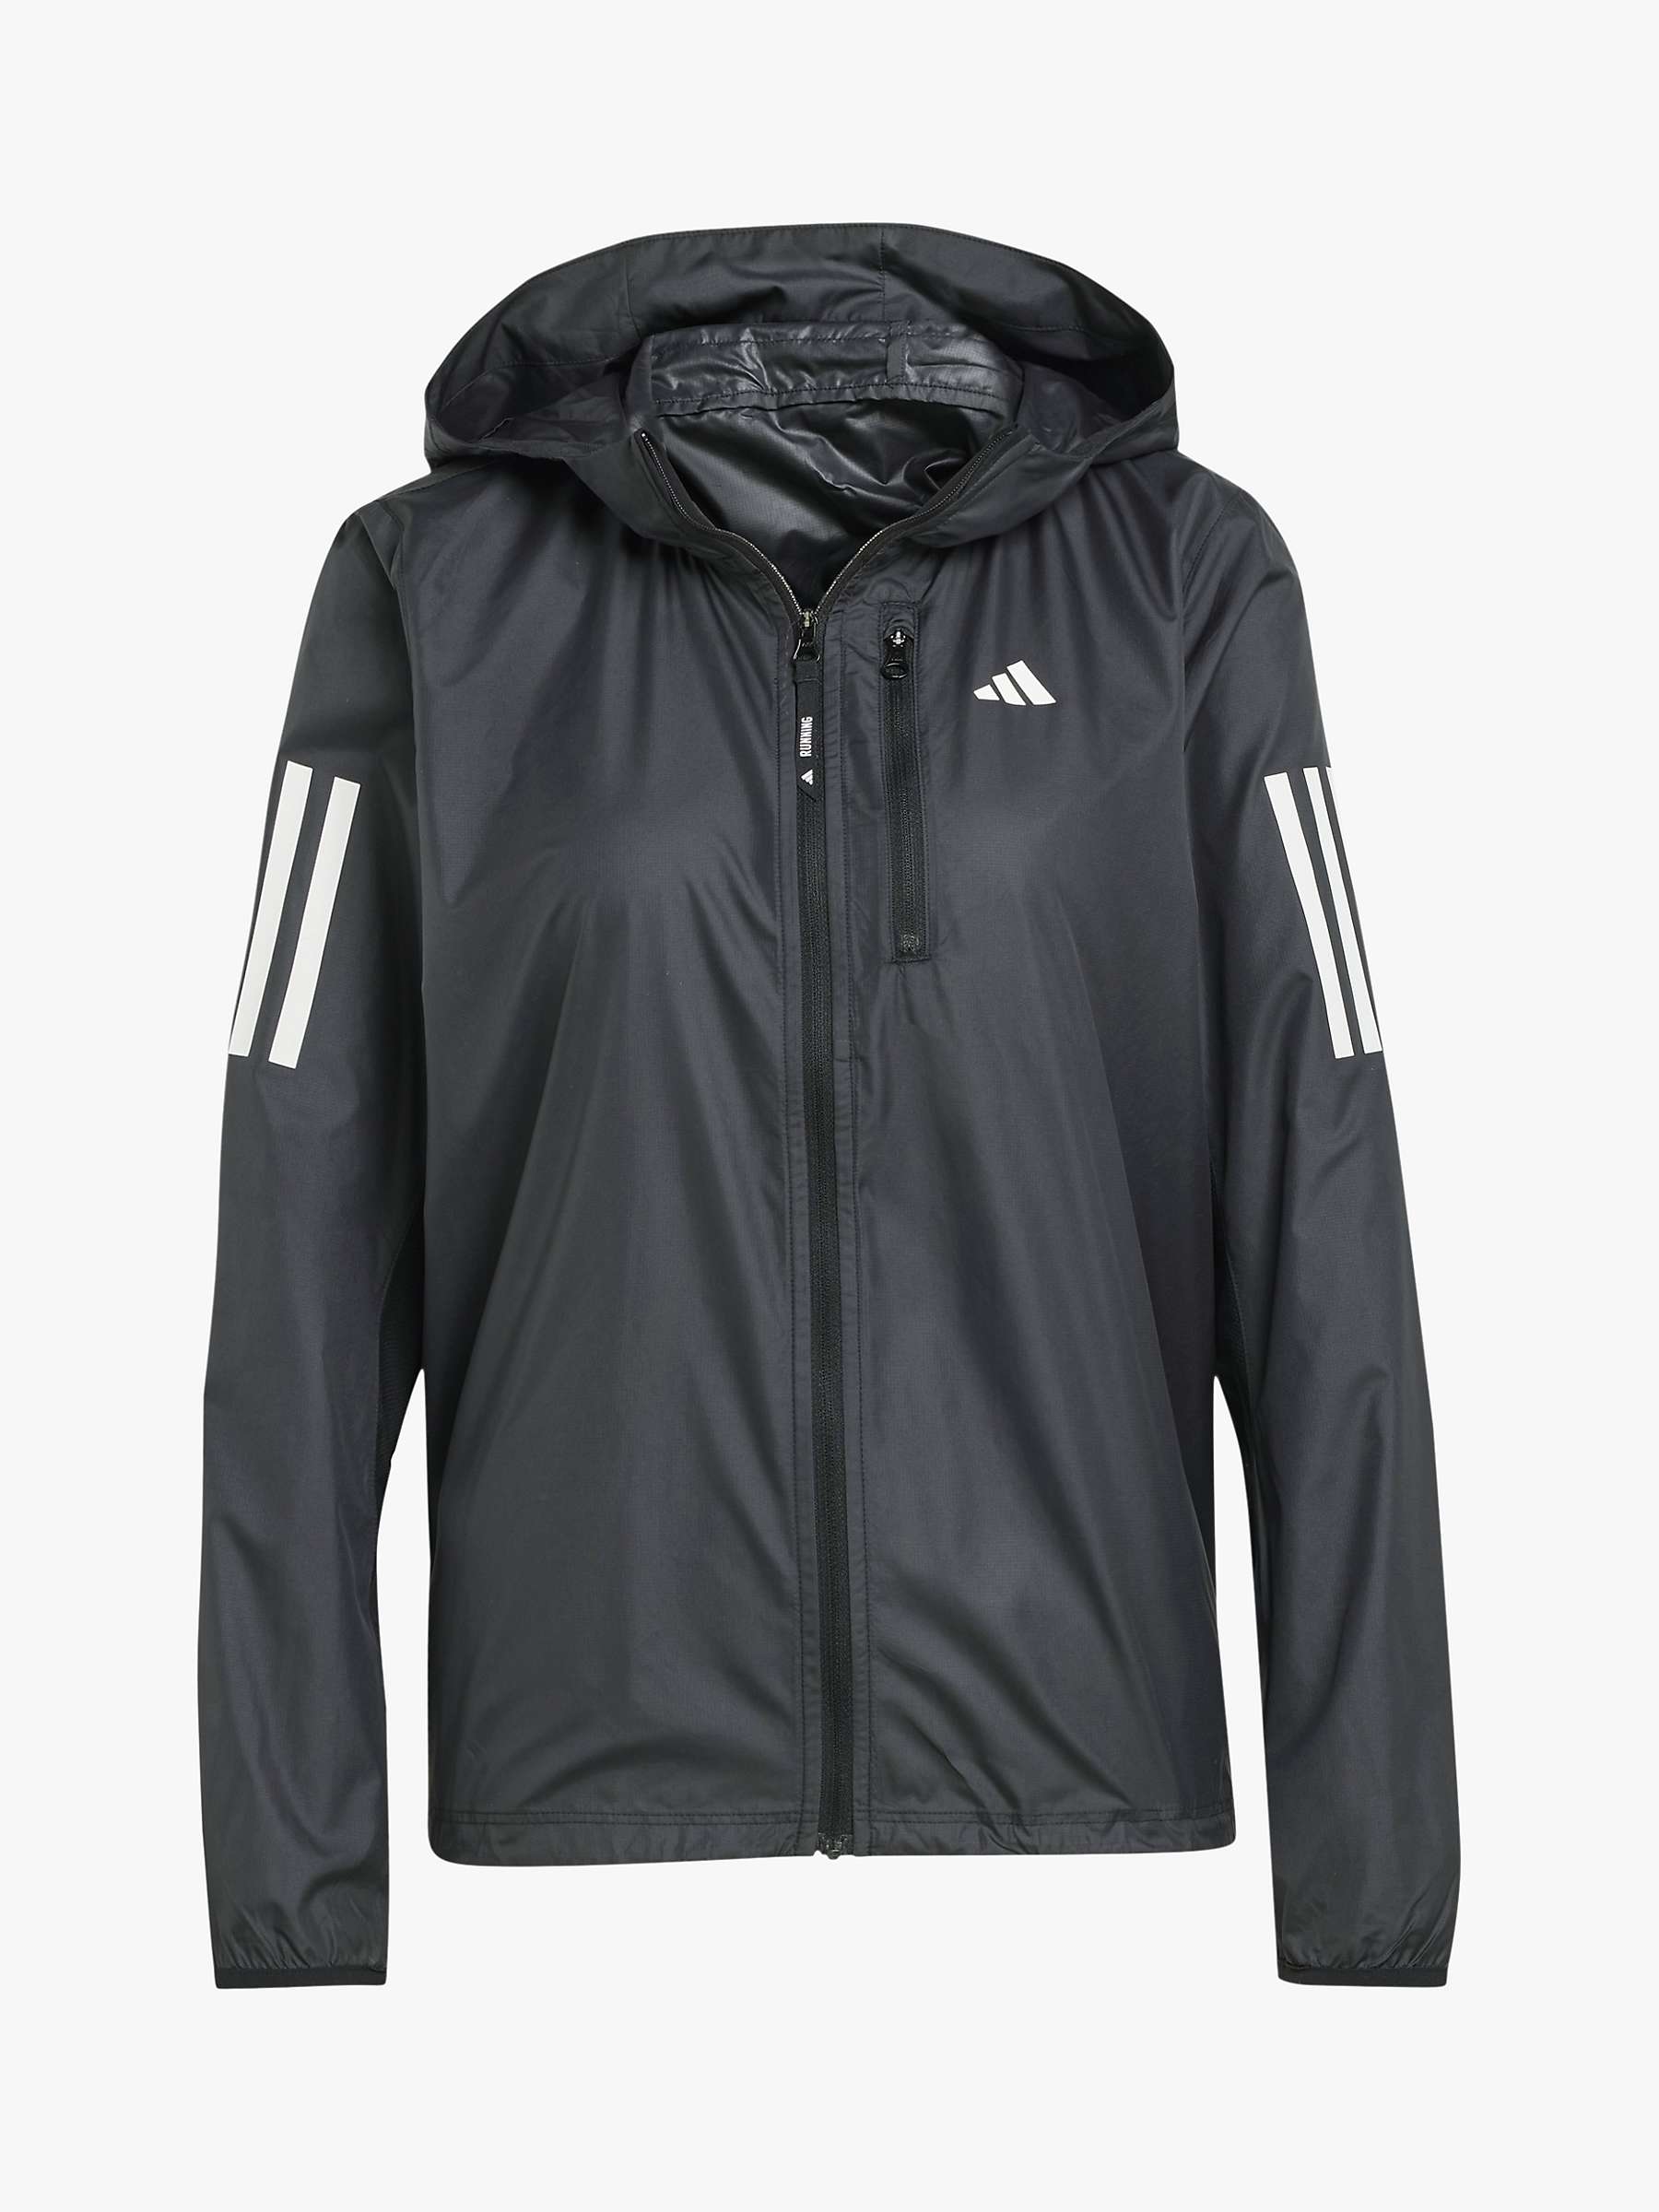 Buy adidas Women's Own The Run Running Jacket, Black Online at johnlewis.com